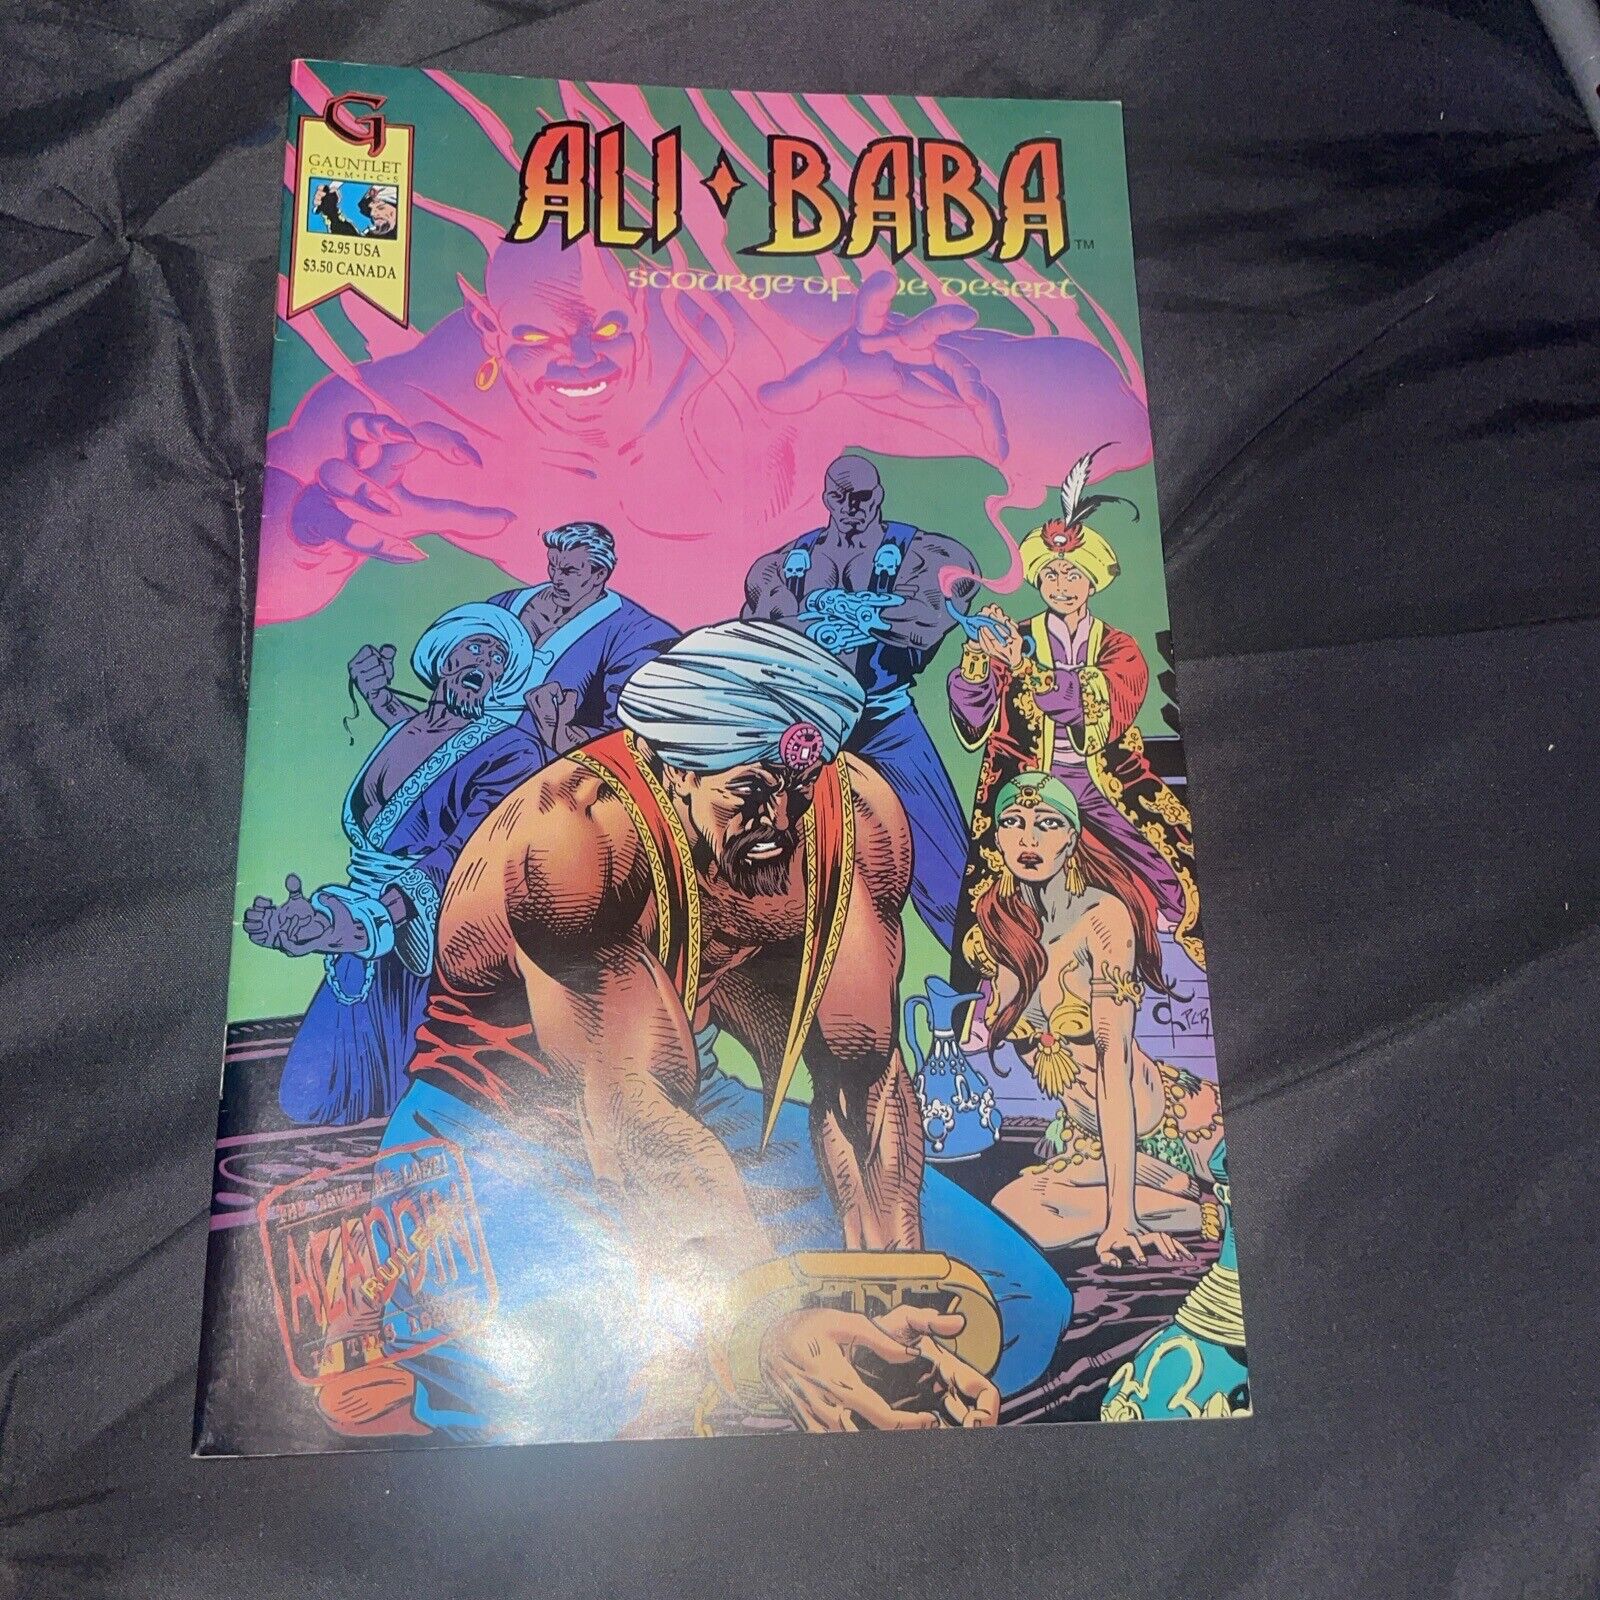 Ali Baba SCOURGE OF THE DESERT #2 1993 Gauntlet Comics Vol 1 Number 2